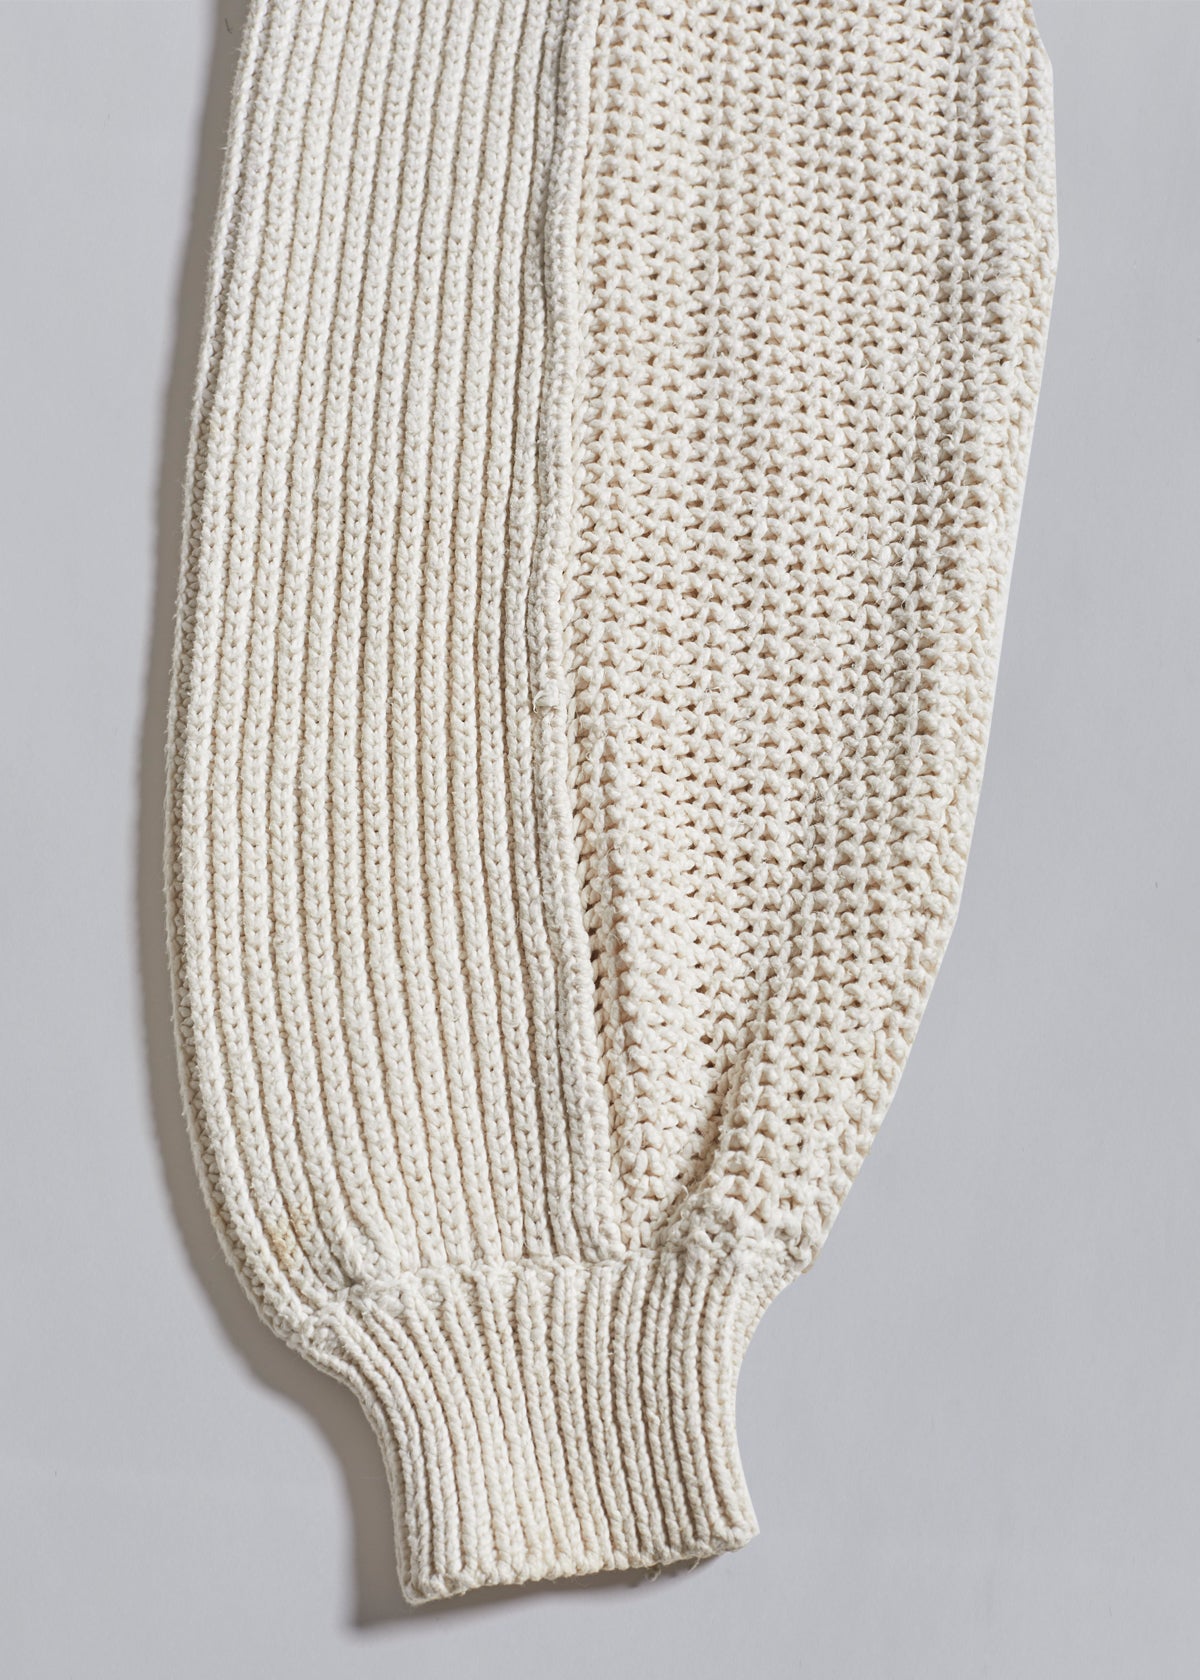 CDGH Patchwork Cotton Knit Jumper 1980's - Medium - The Archivist Store